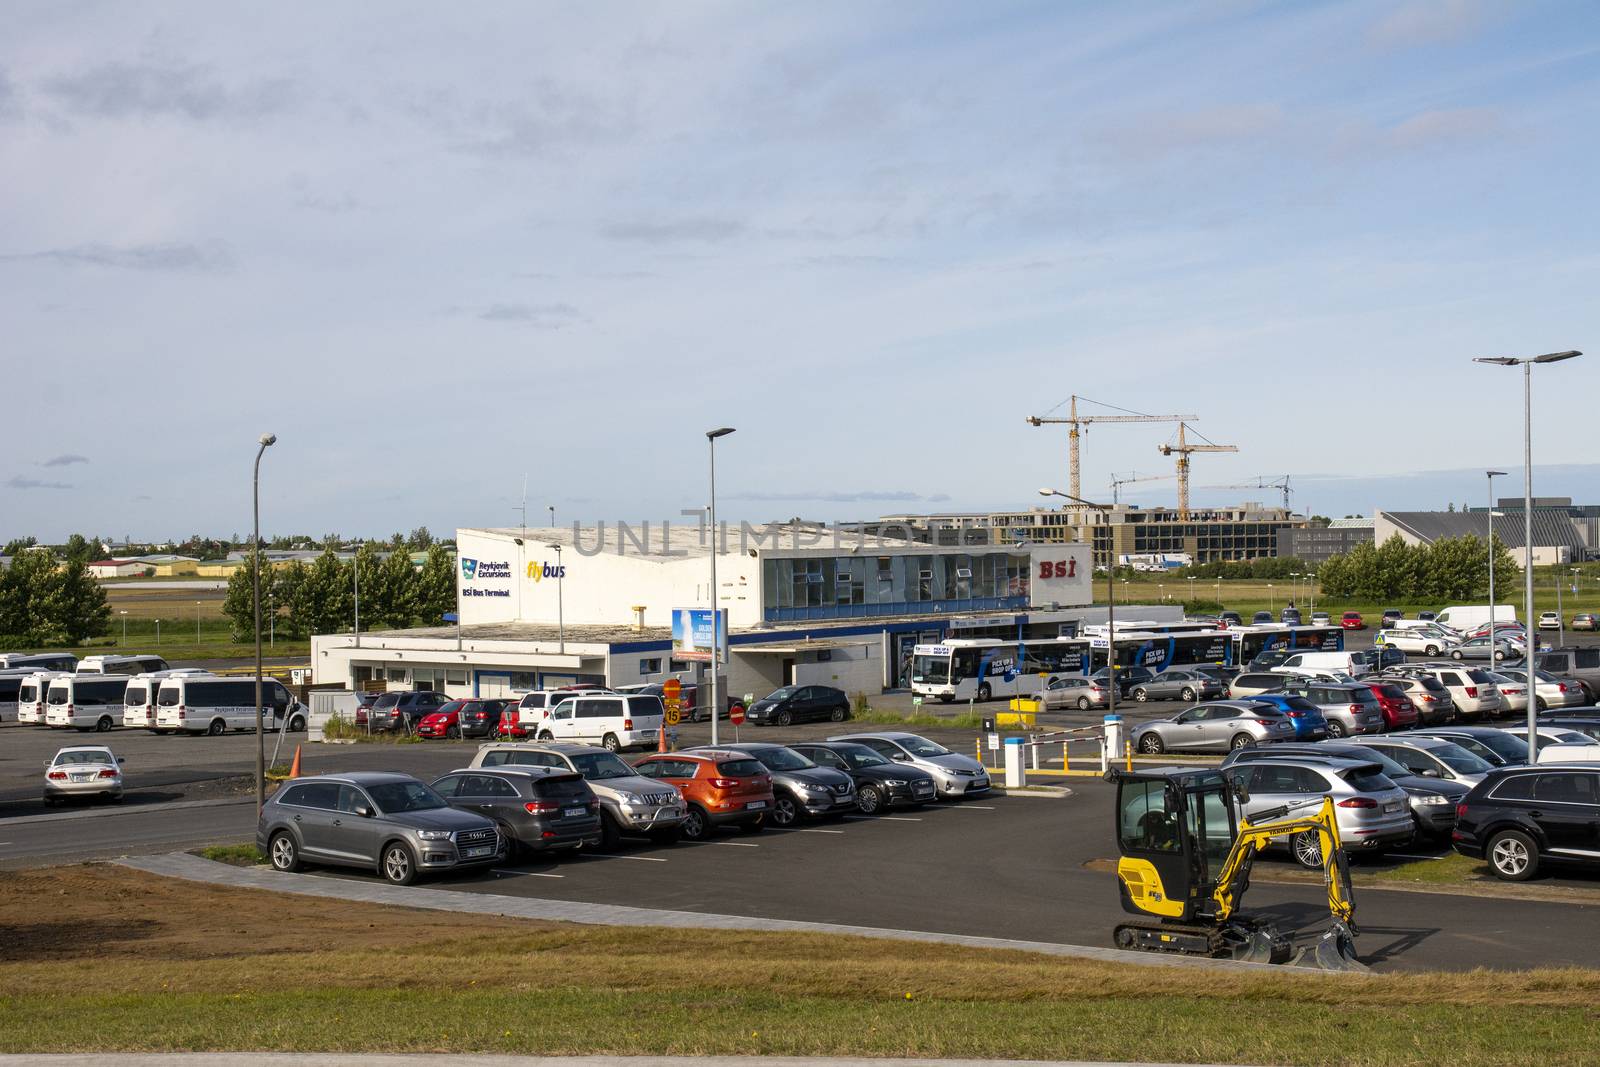 Reykjavik, Iceland, July 2019: BSI bus terminal, Reykjavik Excursions and flybus parking lot